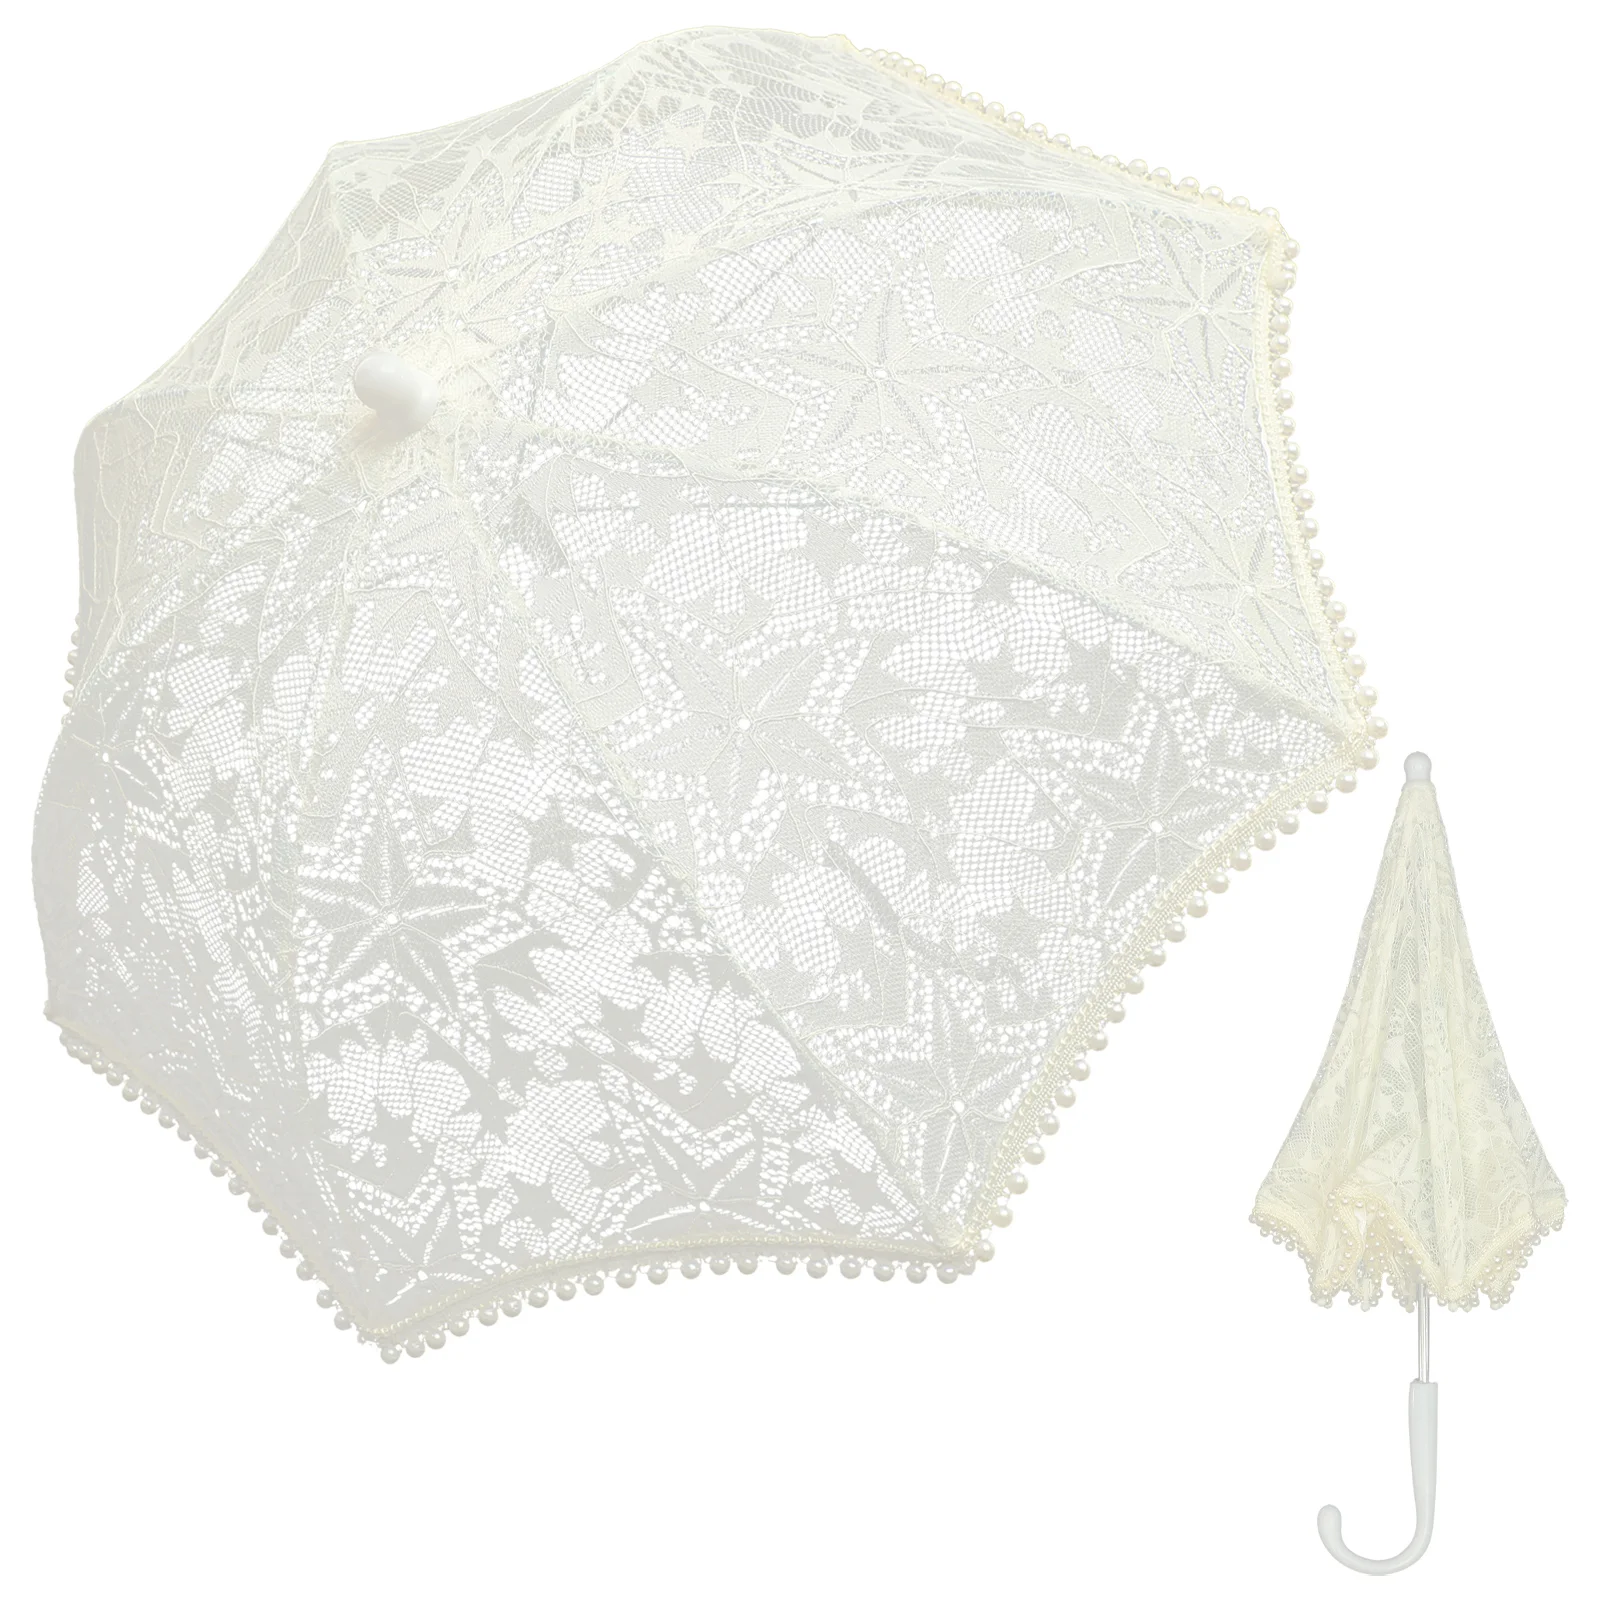 

Baby Bath Essentials Lace Umbrella Parasol Vintage Girls Clothing Wedding Umbrellas Bulk White Tea Party Beach For kids